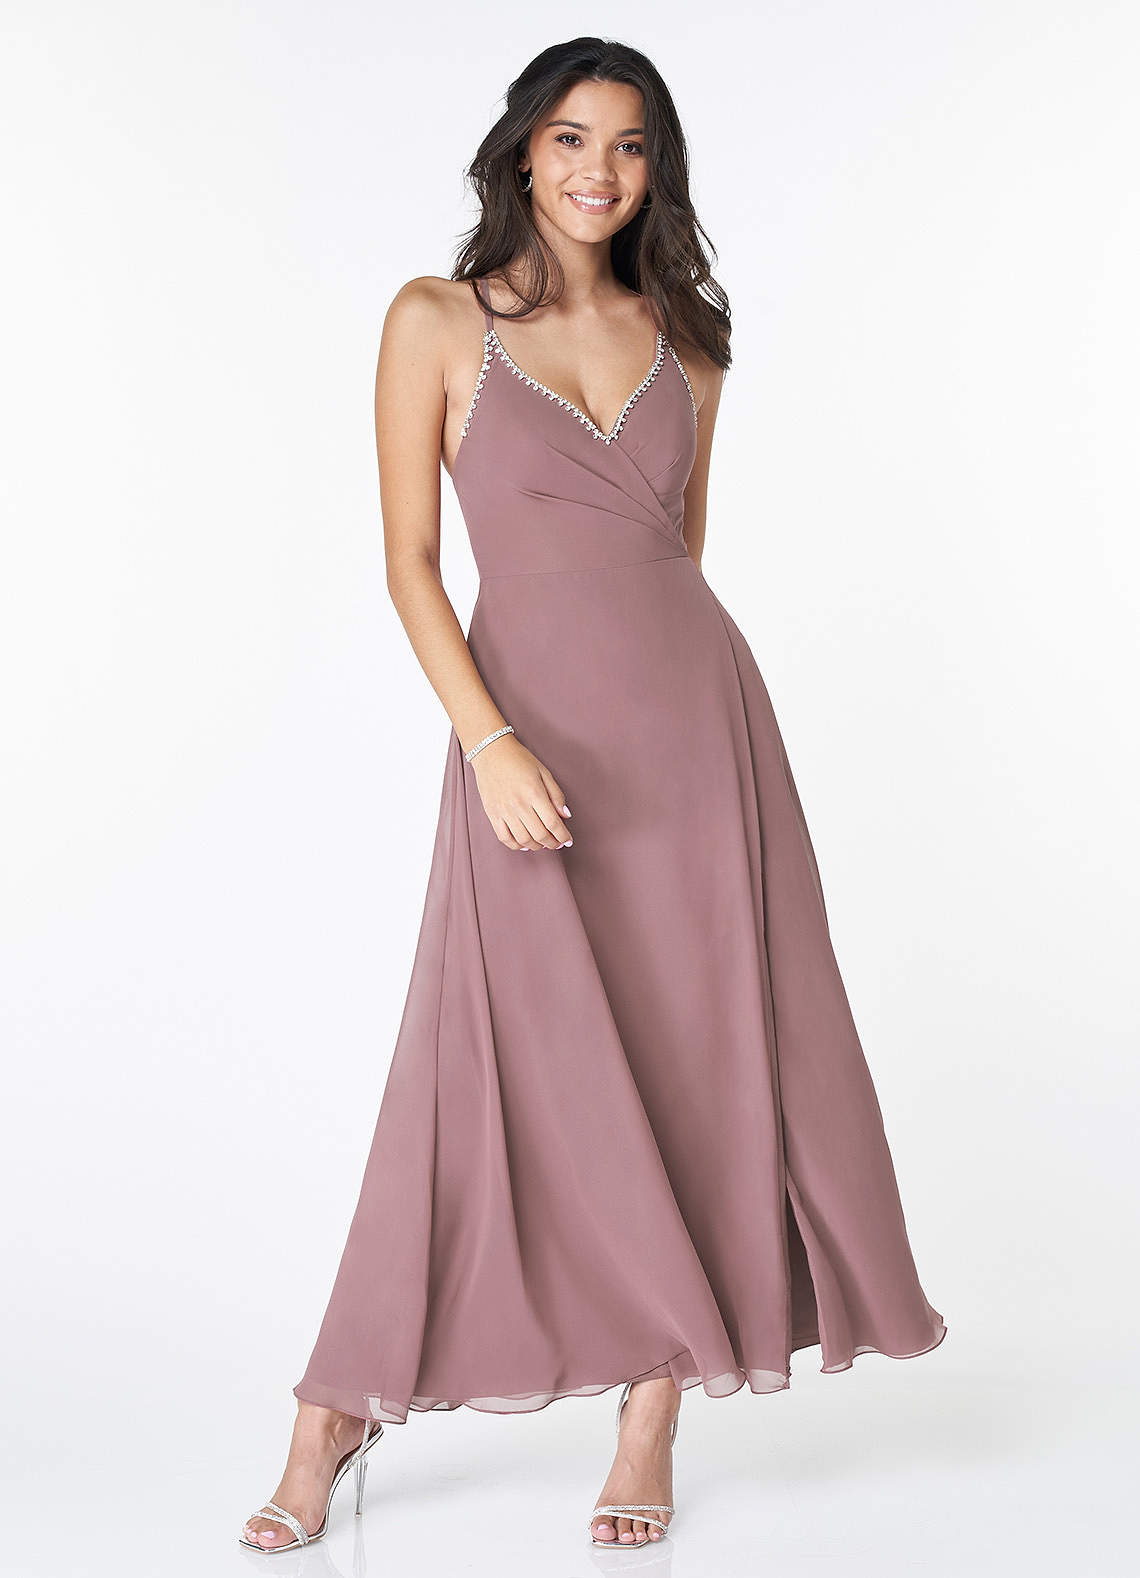 Henderson Rouge Pink Sleeveless Maxi Dress image1